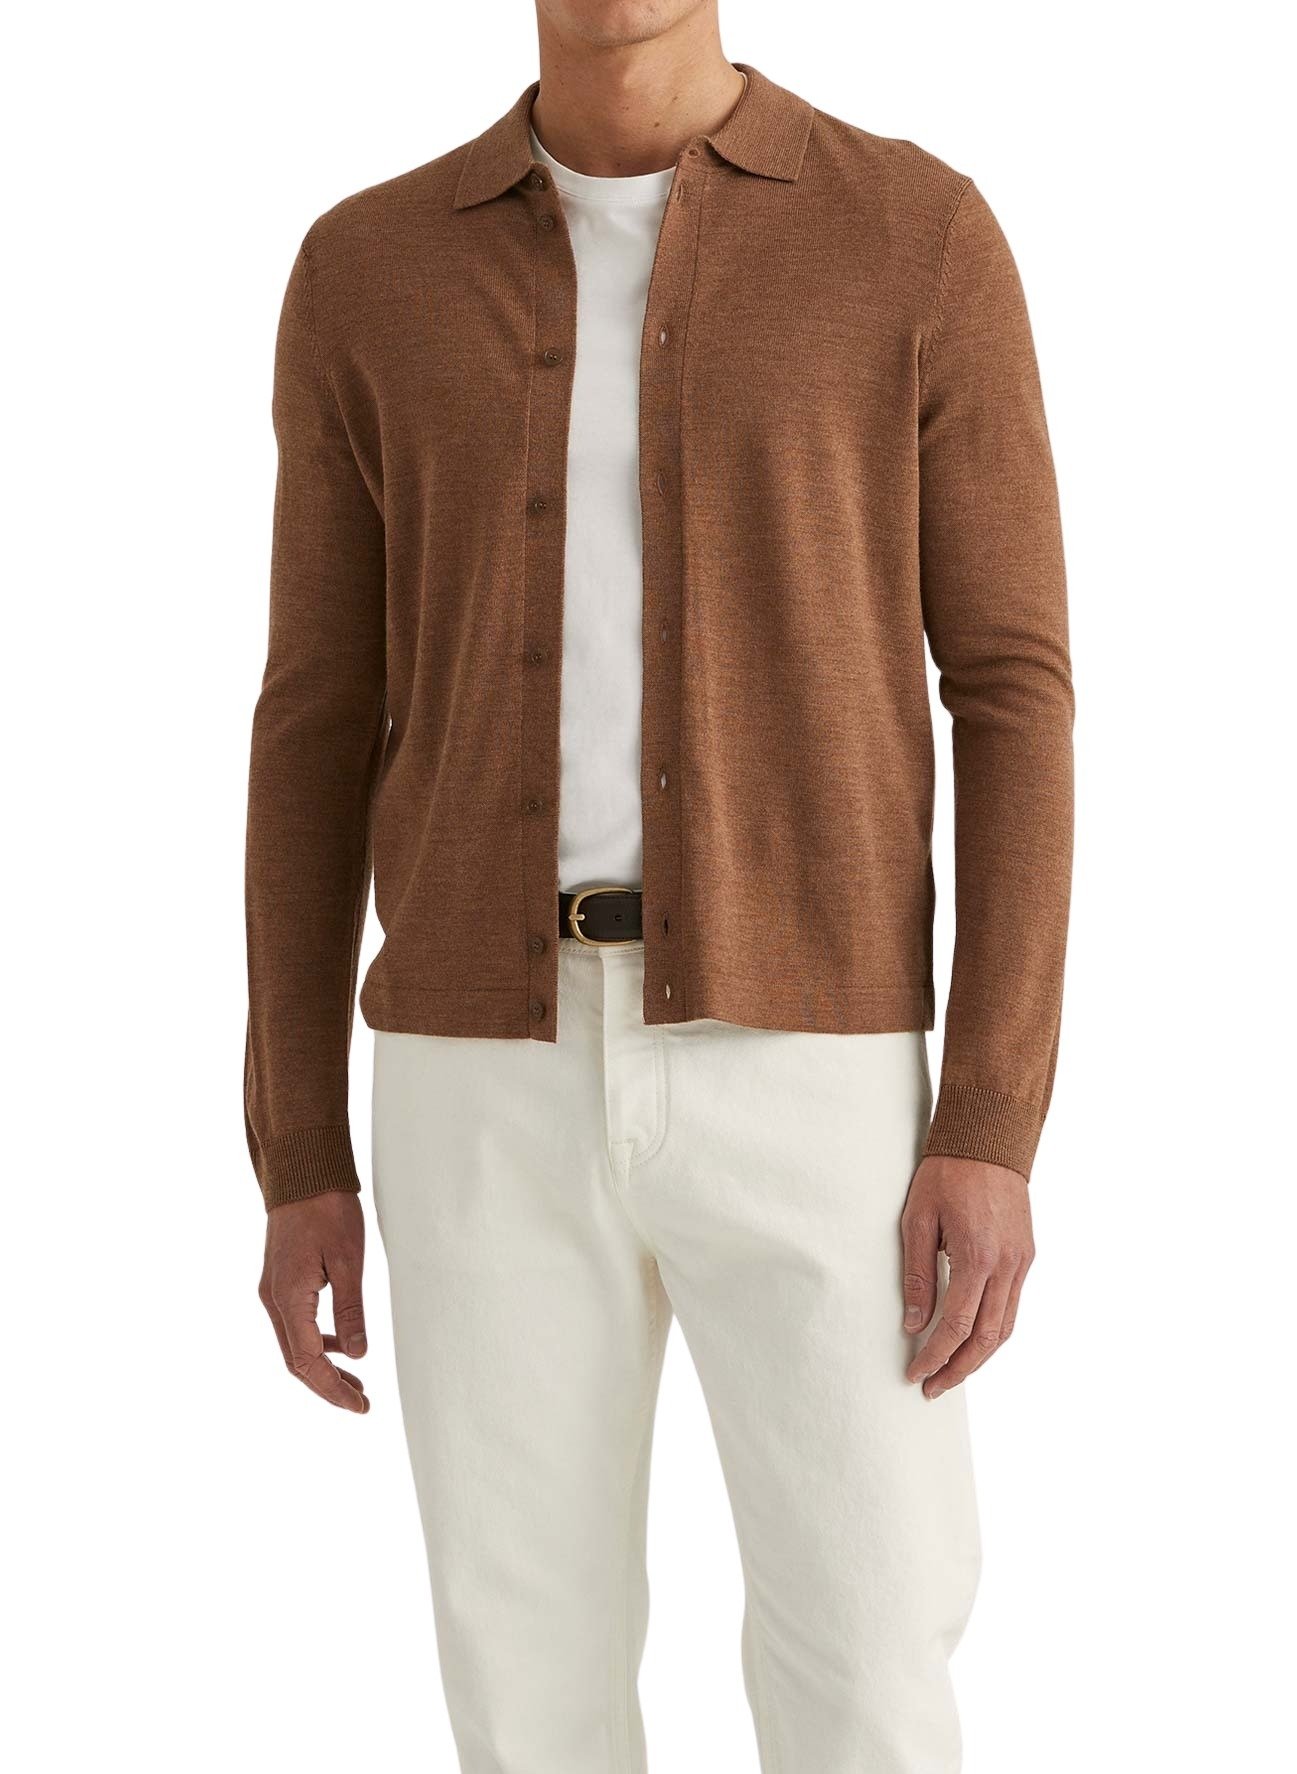 901276-merino-knitted-shirt-09-camel-1